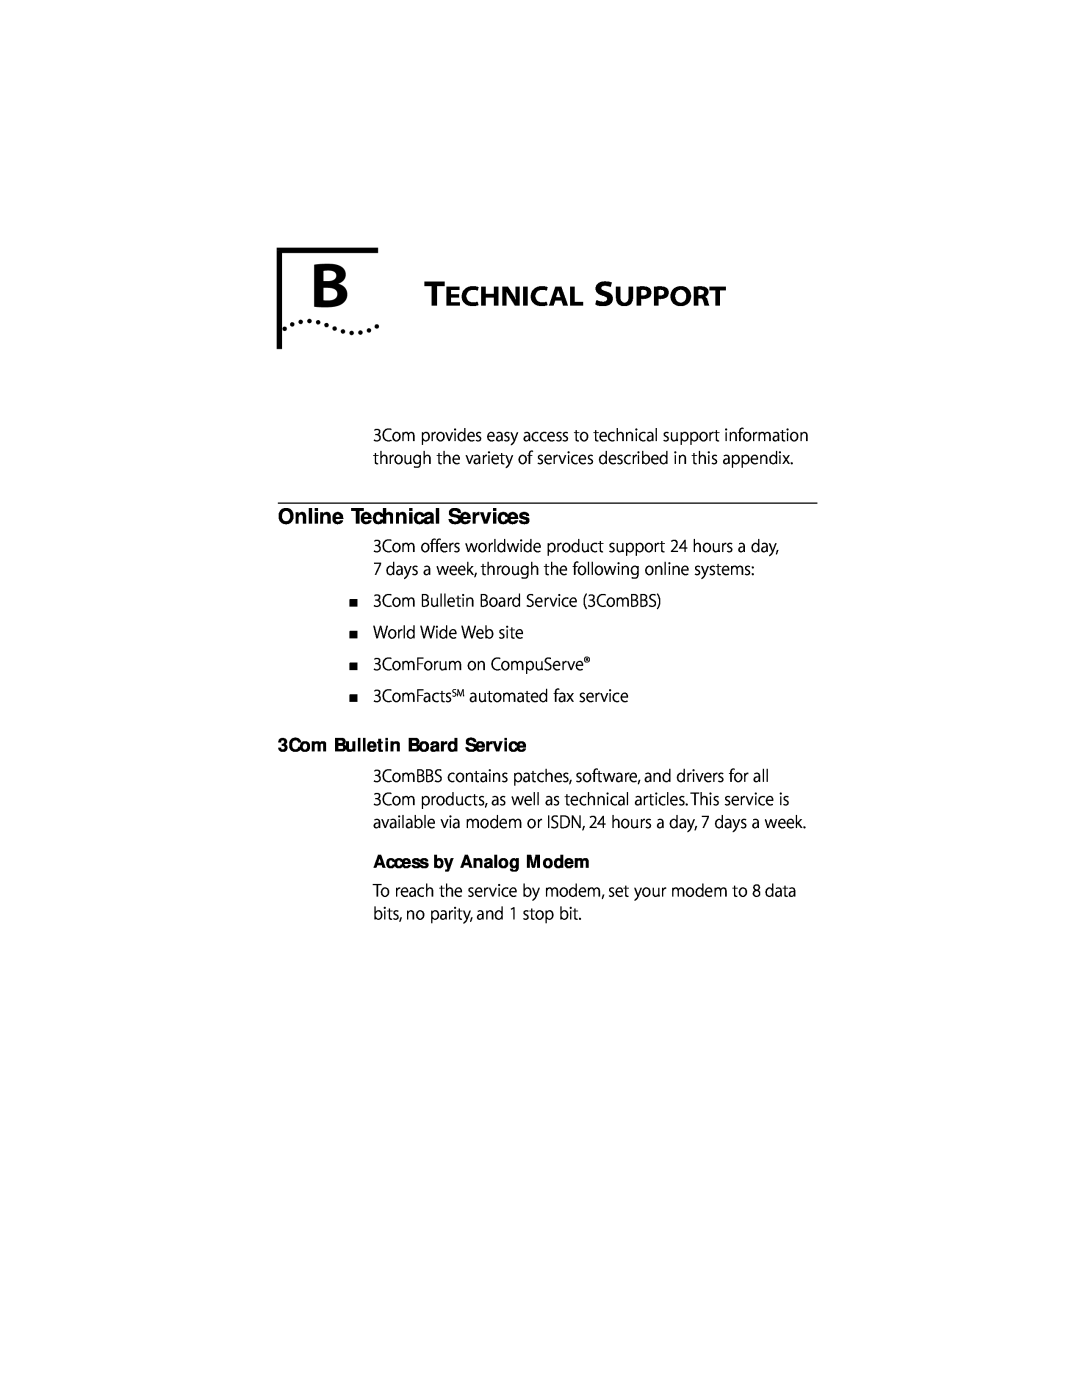 3Com 155 PCI manual B Technical Support, Online Technical Services, 3Com Bulletin Board Service 